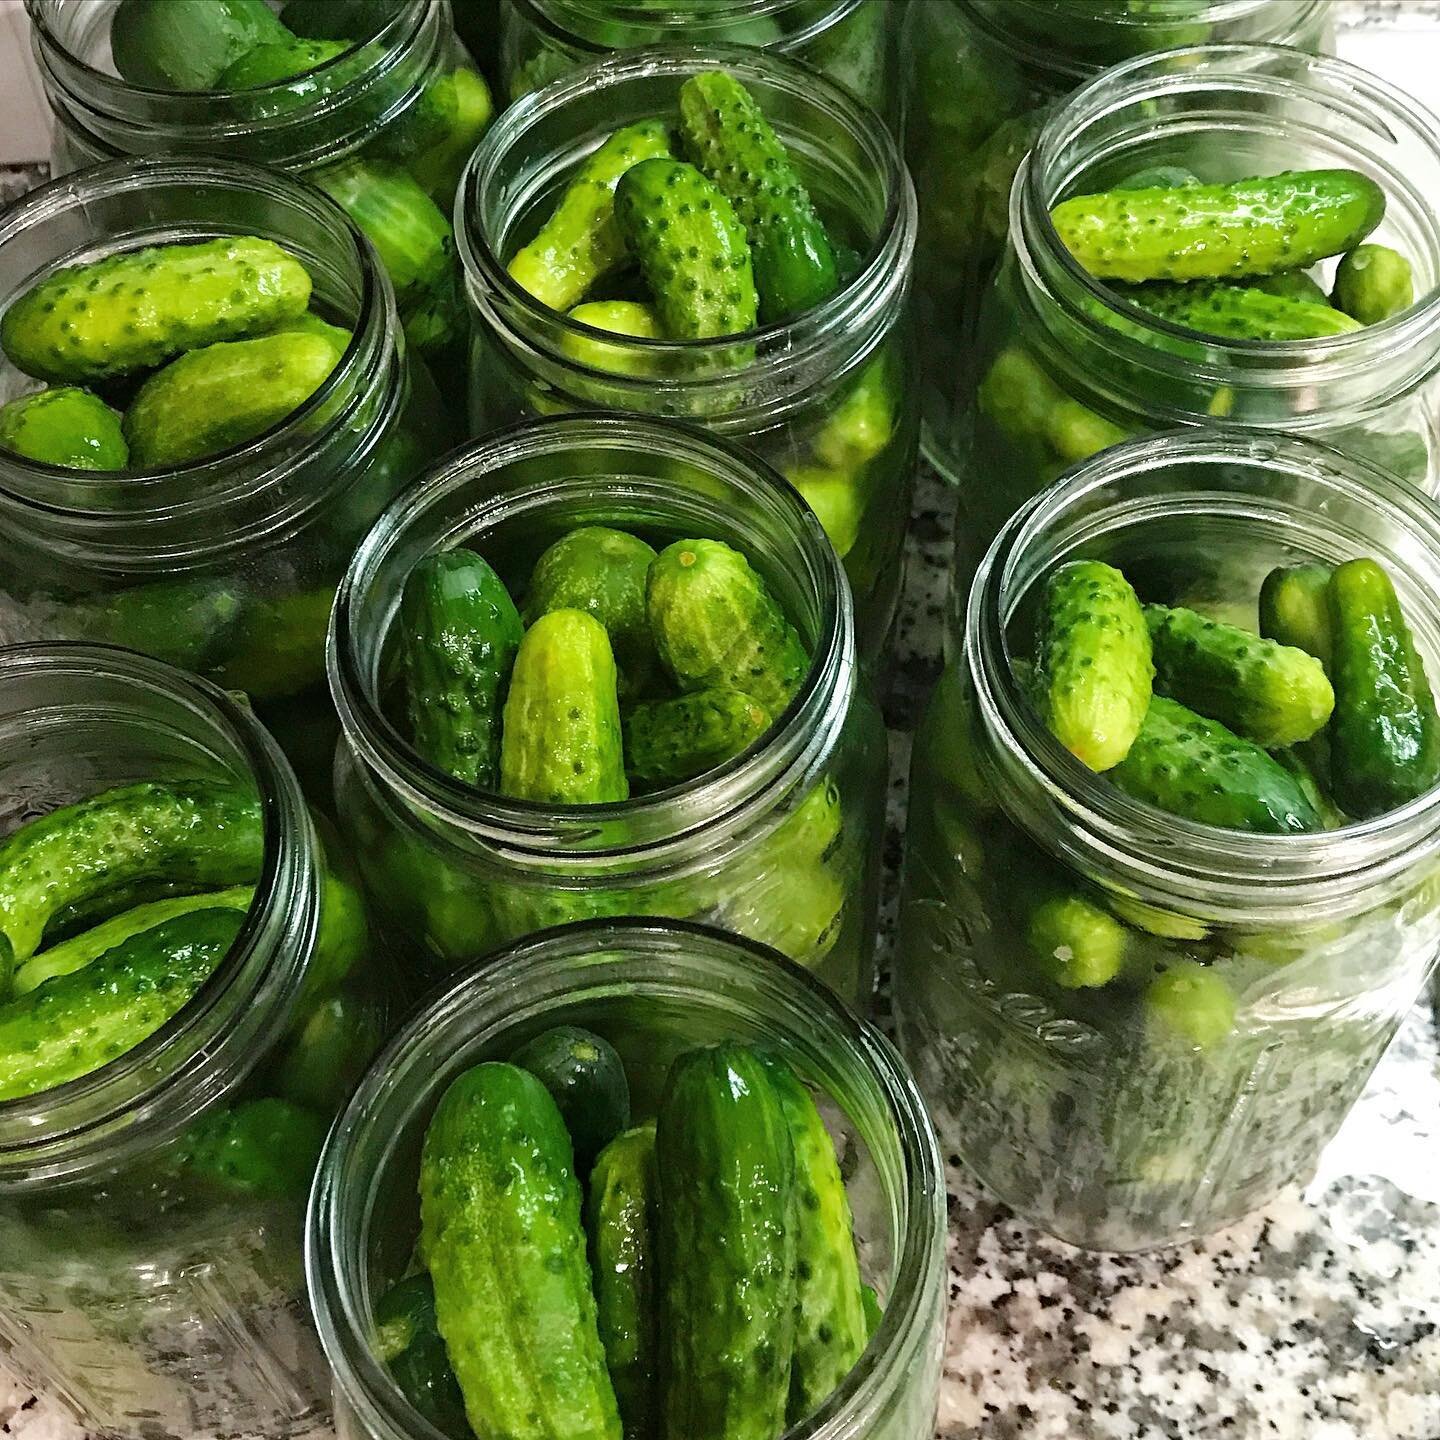 ready for the brine bath

#pickles #dillpickles #gherkins #fermentedfoods #homemadepickles #picklesarelife #gherkinsarelife #nobigdill #babycukes #babycukesarethebest